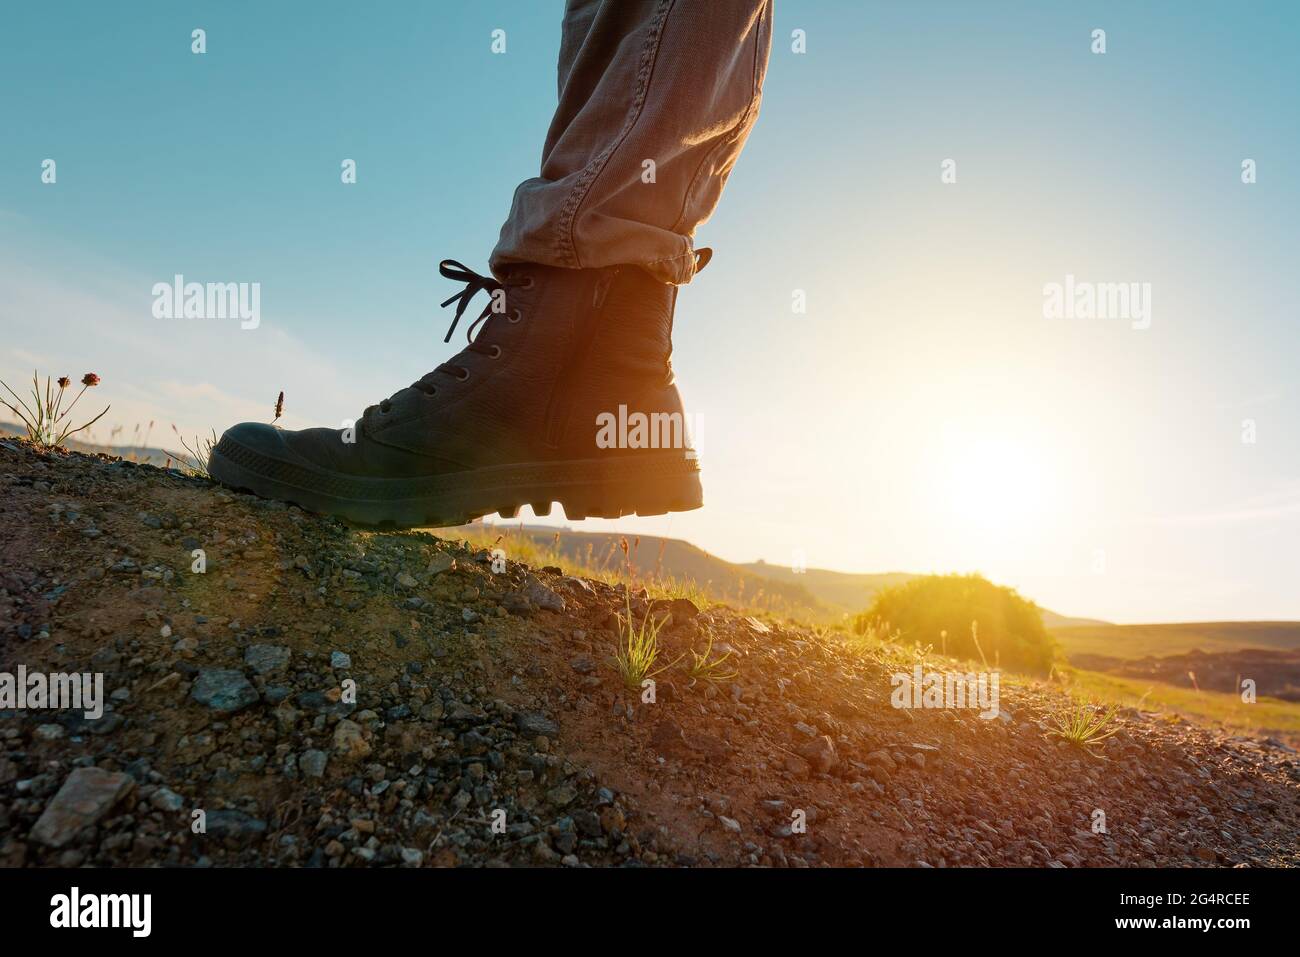 Bota de senderismo fotografías e imágenes de alta resolución - Alamy